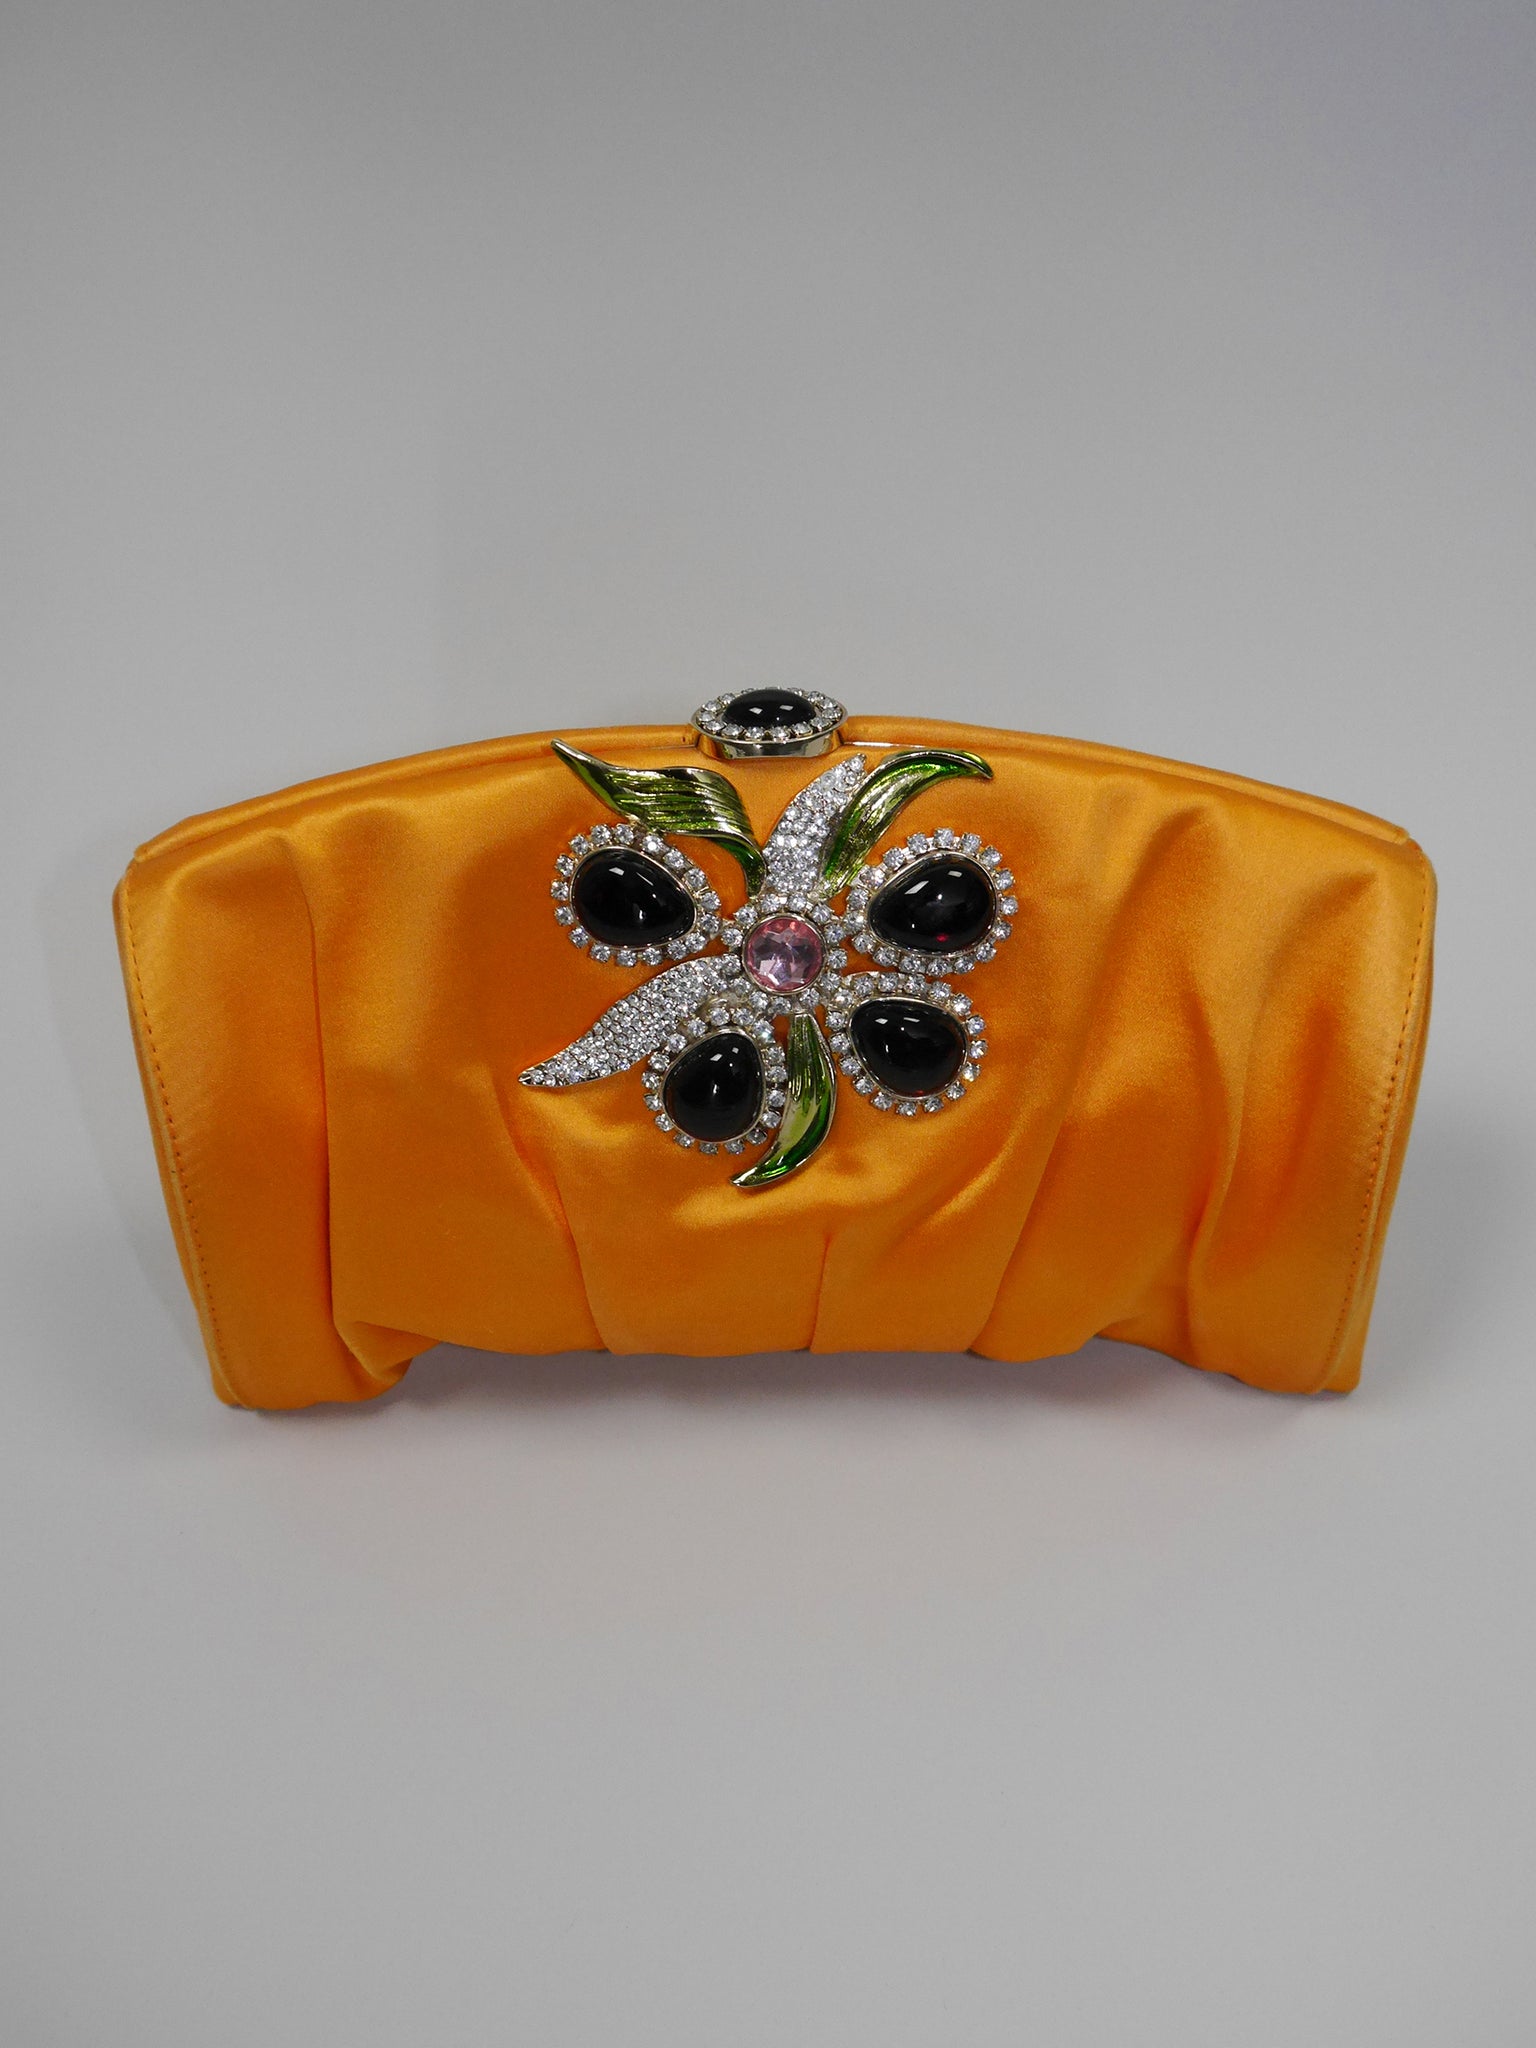 YVES SAINT LAURENT by Tom Ford Spring 2004 Vintage Floral Crystal Rhinestone Silk Evening Clutch Bag